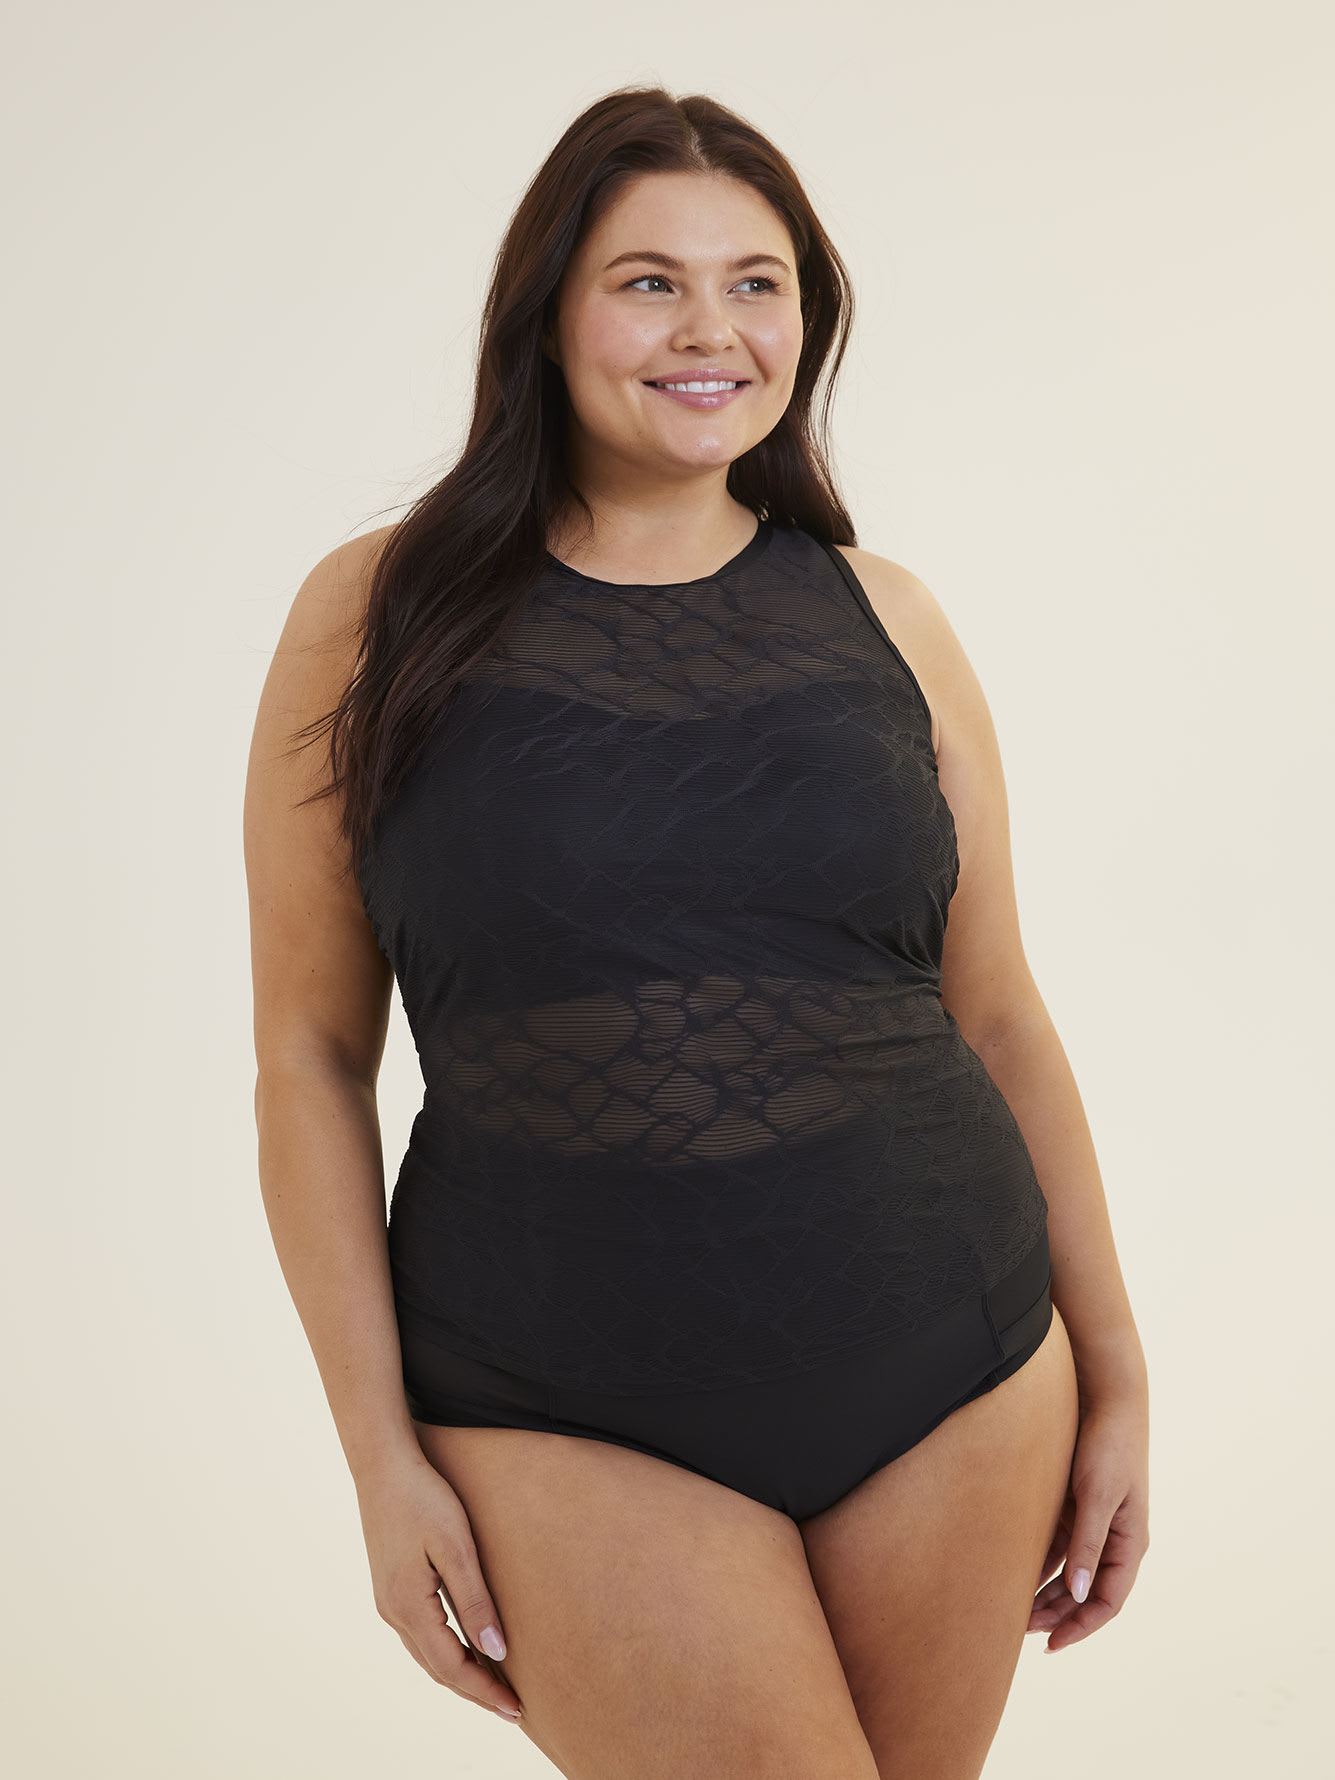  Bathing Suit Tops for Women Large Bust Plus Size Women's New Fat  Large Swimsuit Bikini Plus Size Swimsuit : Clothing, Shoes & Jewelry